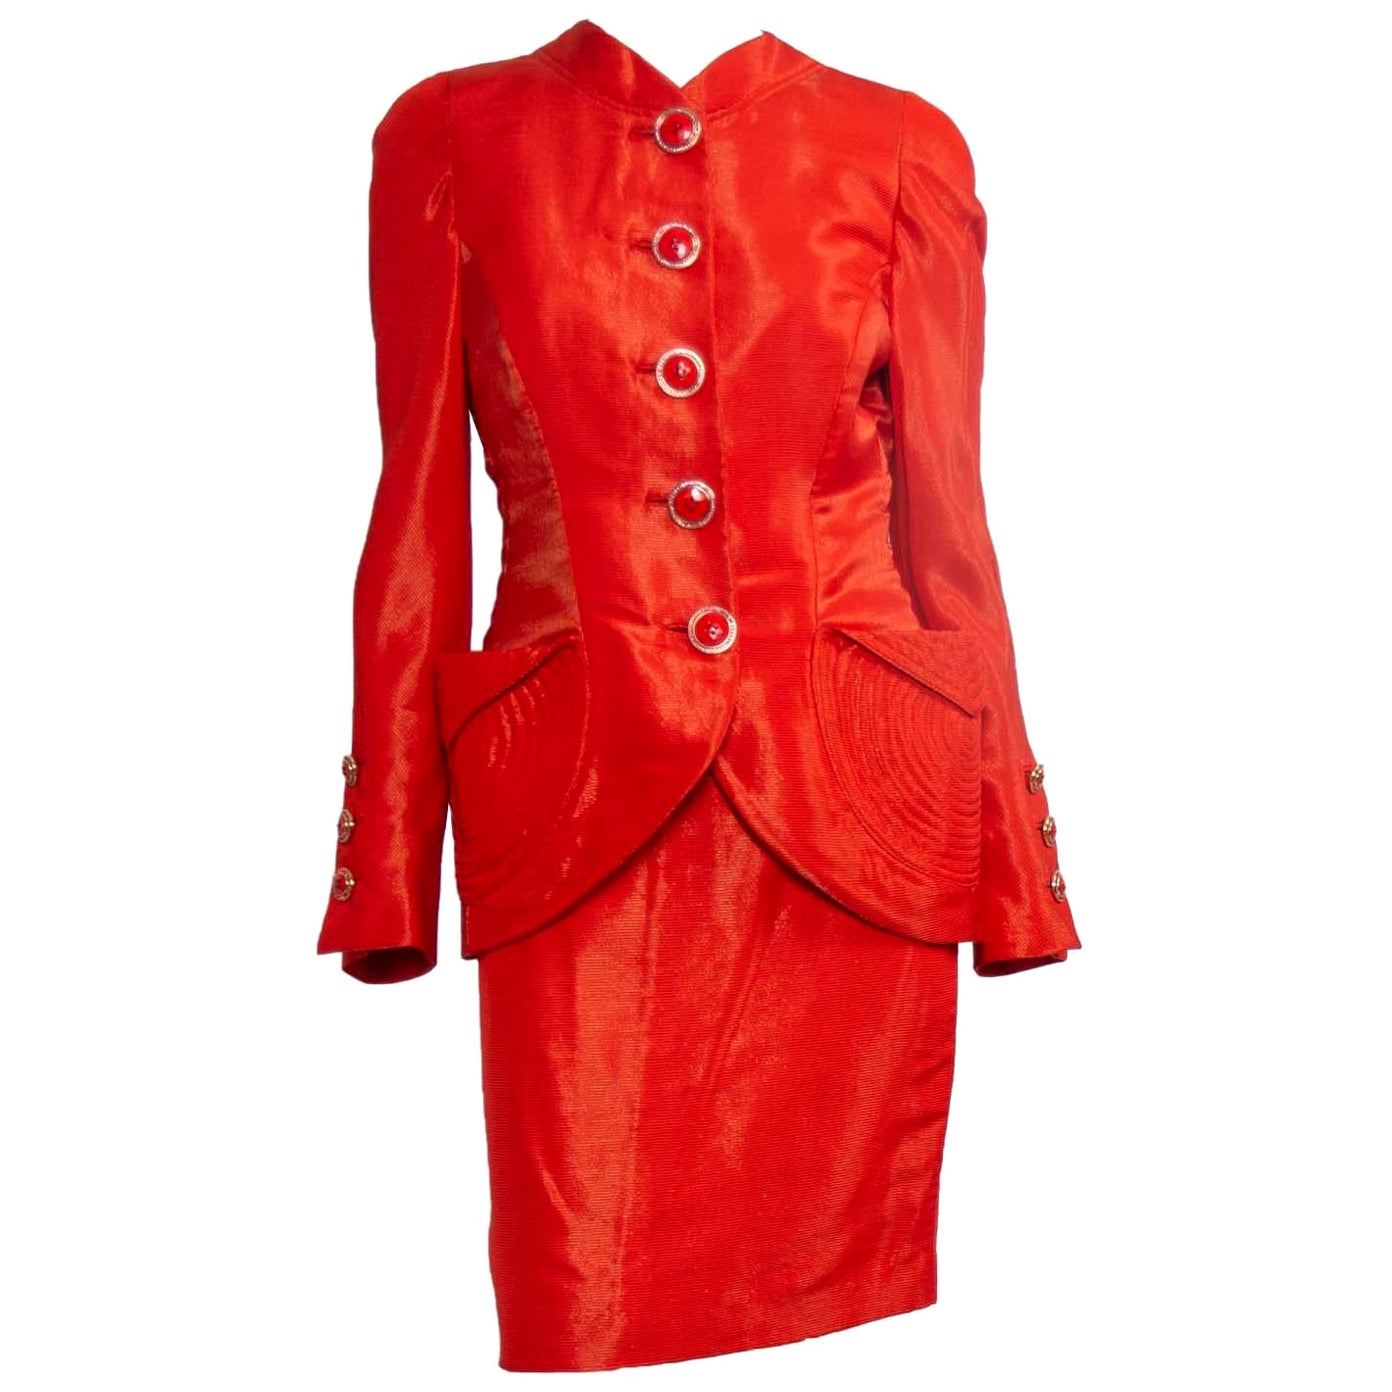 S/S 1991 Gianni Versace Couture Orange Metallic Skirt Suit 